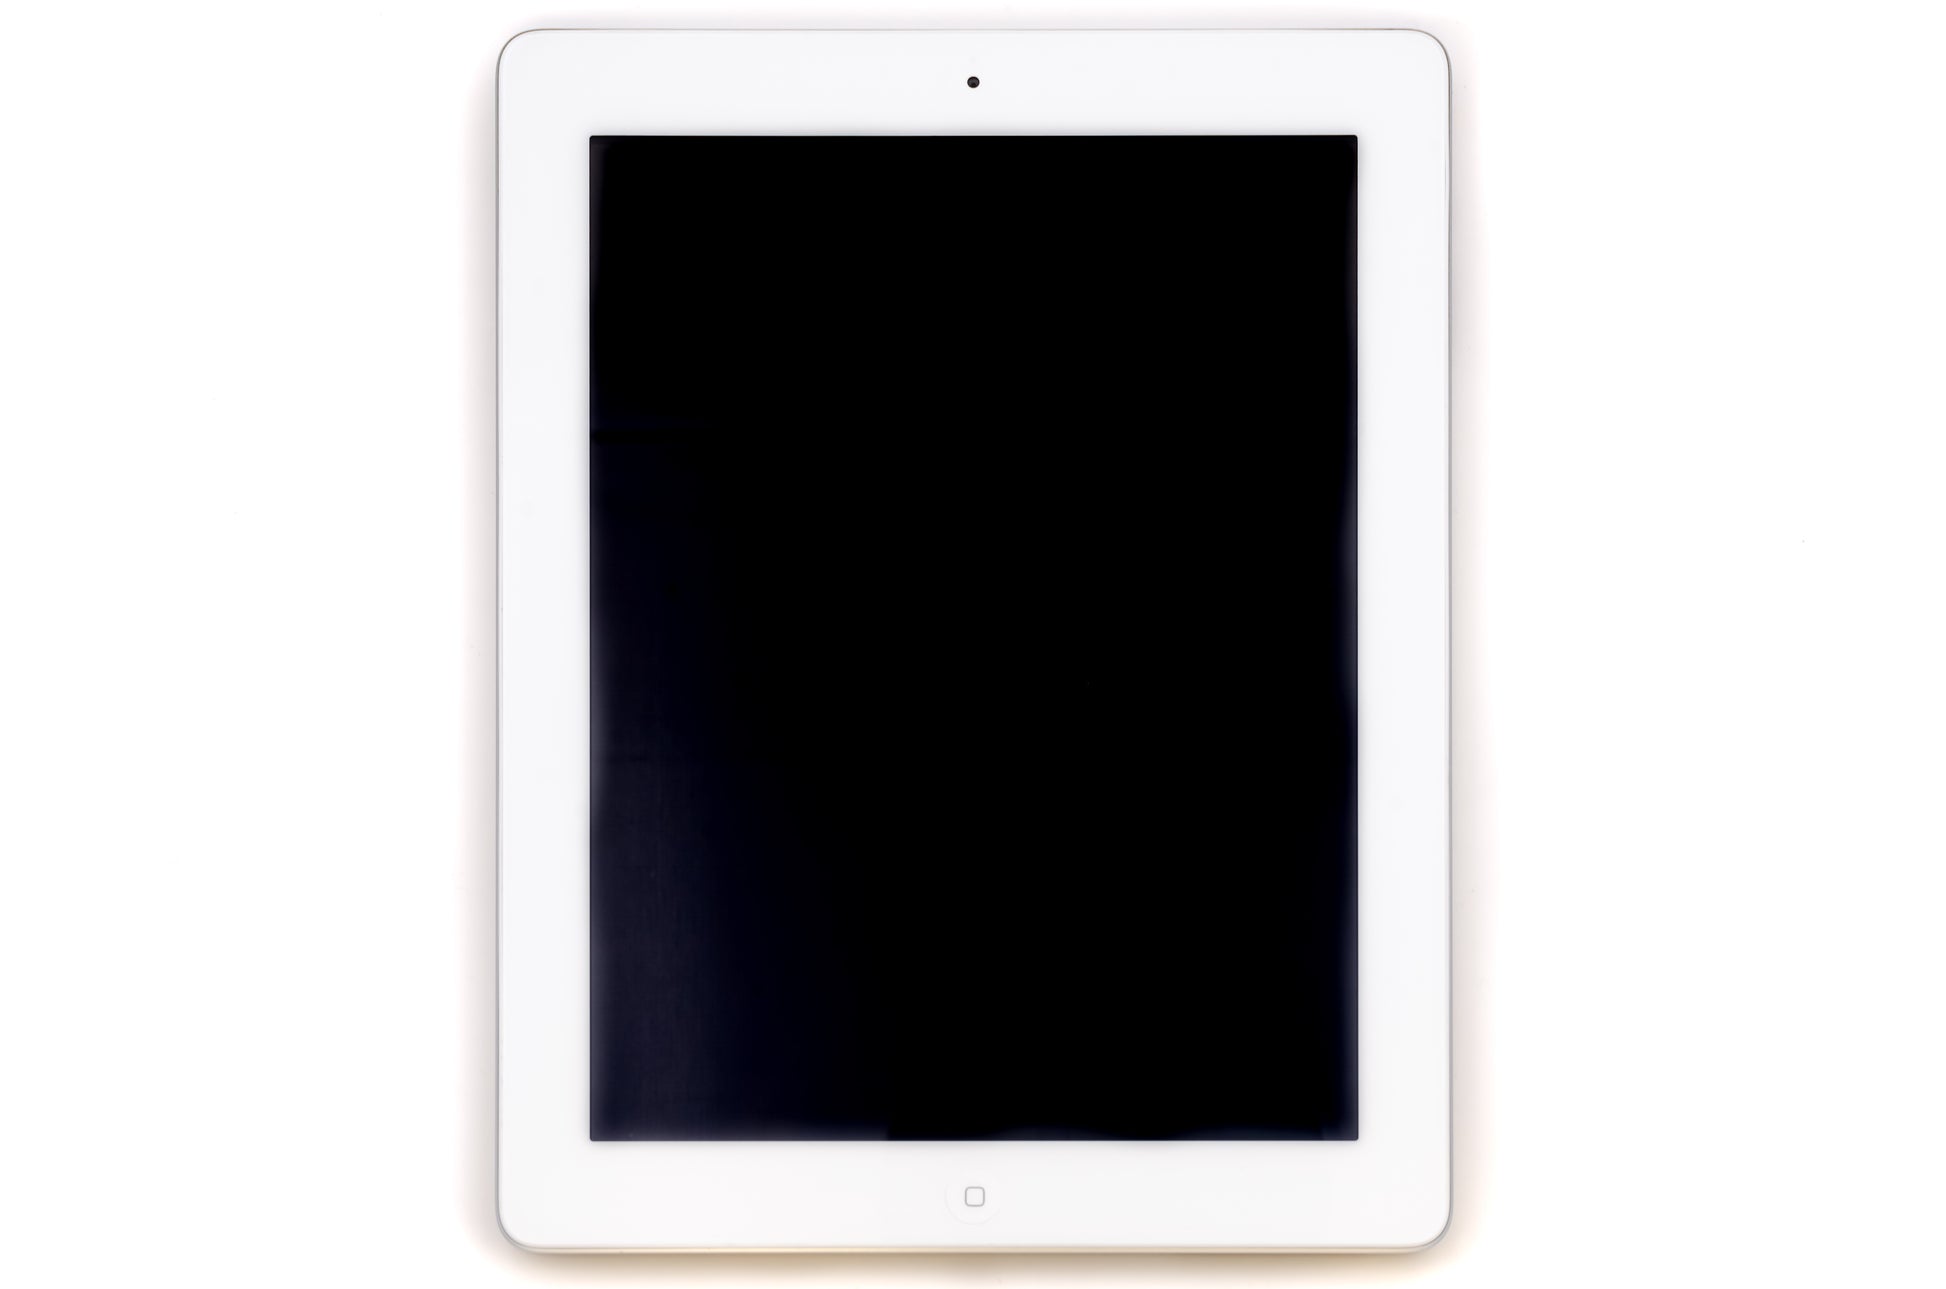 apple-2012-9.7-inch-ipad-4-a1460-silver/white-2